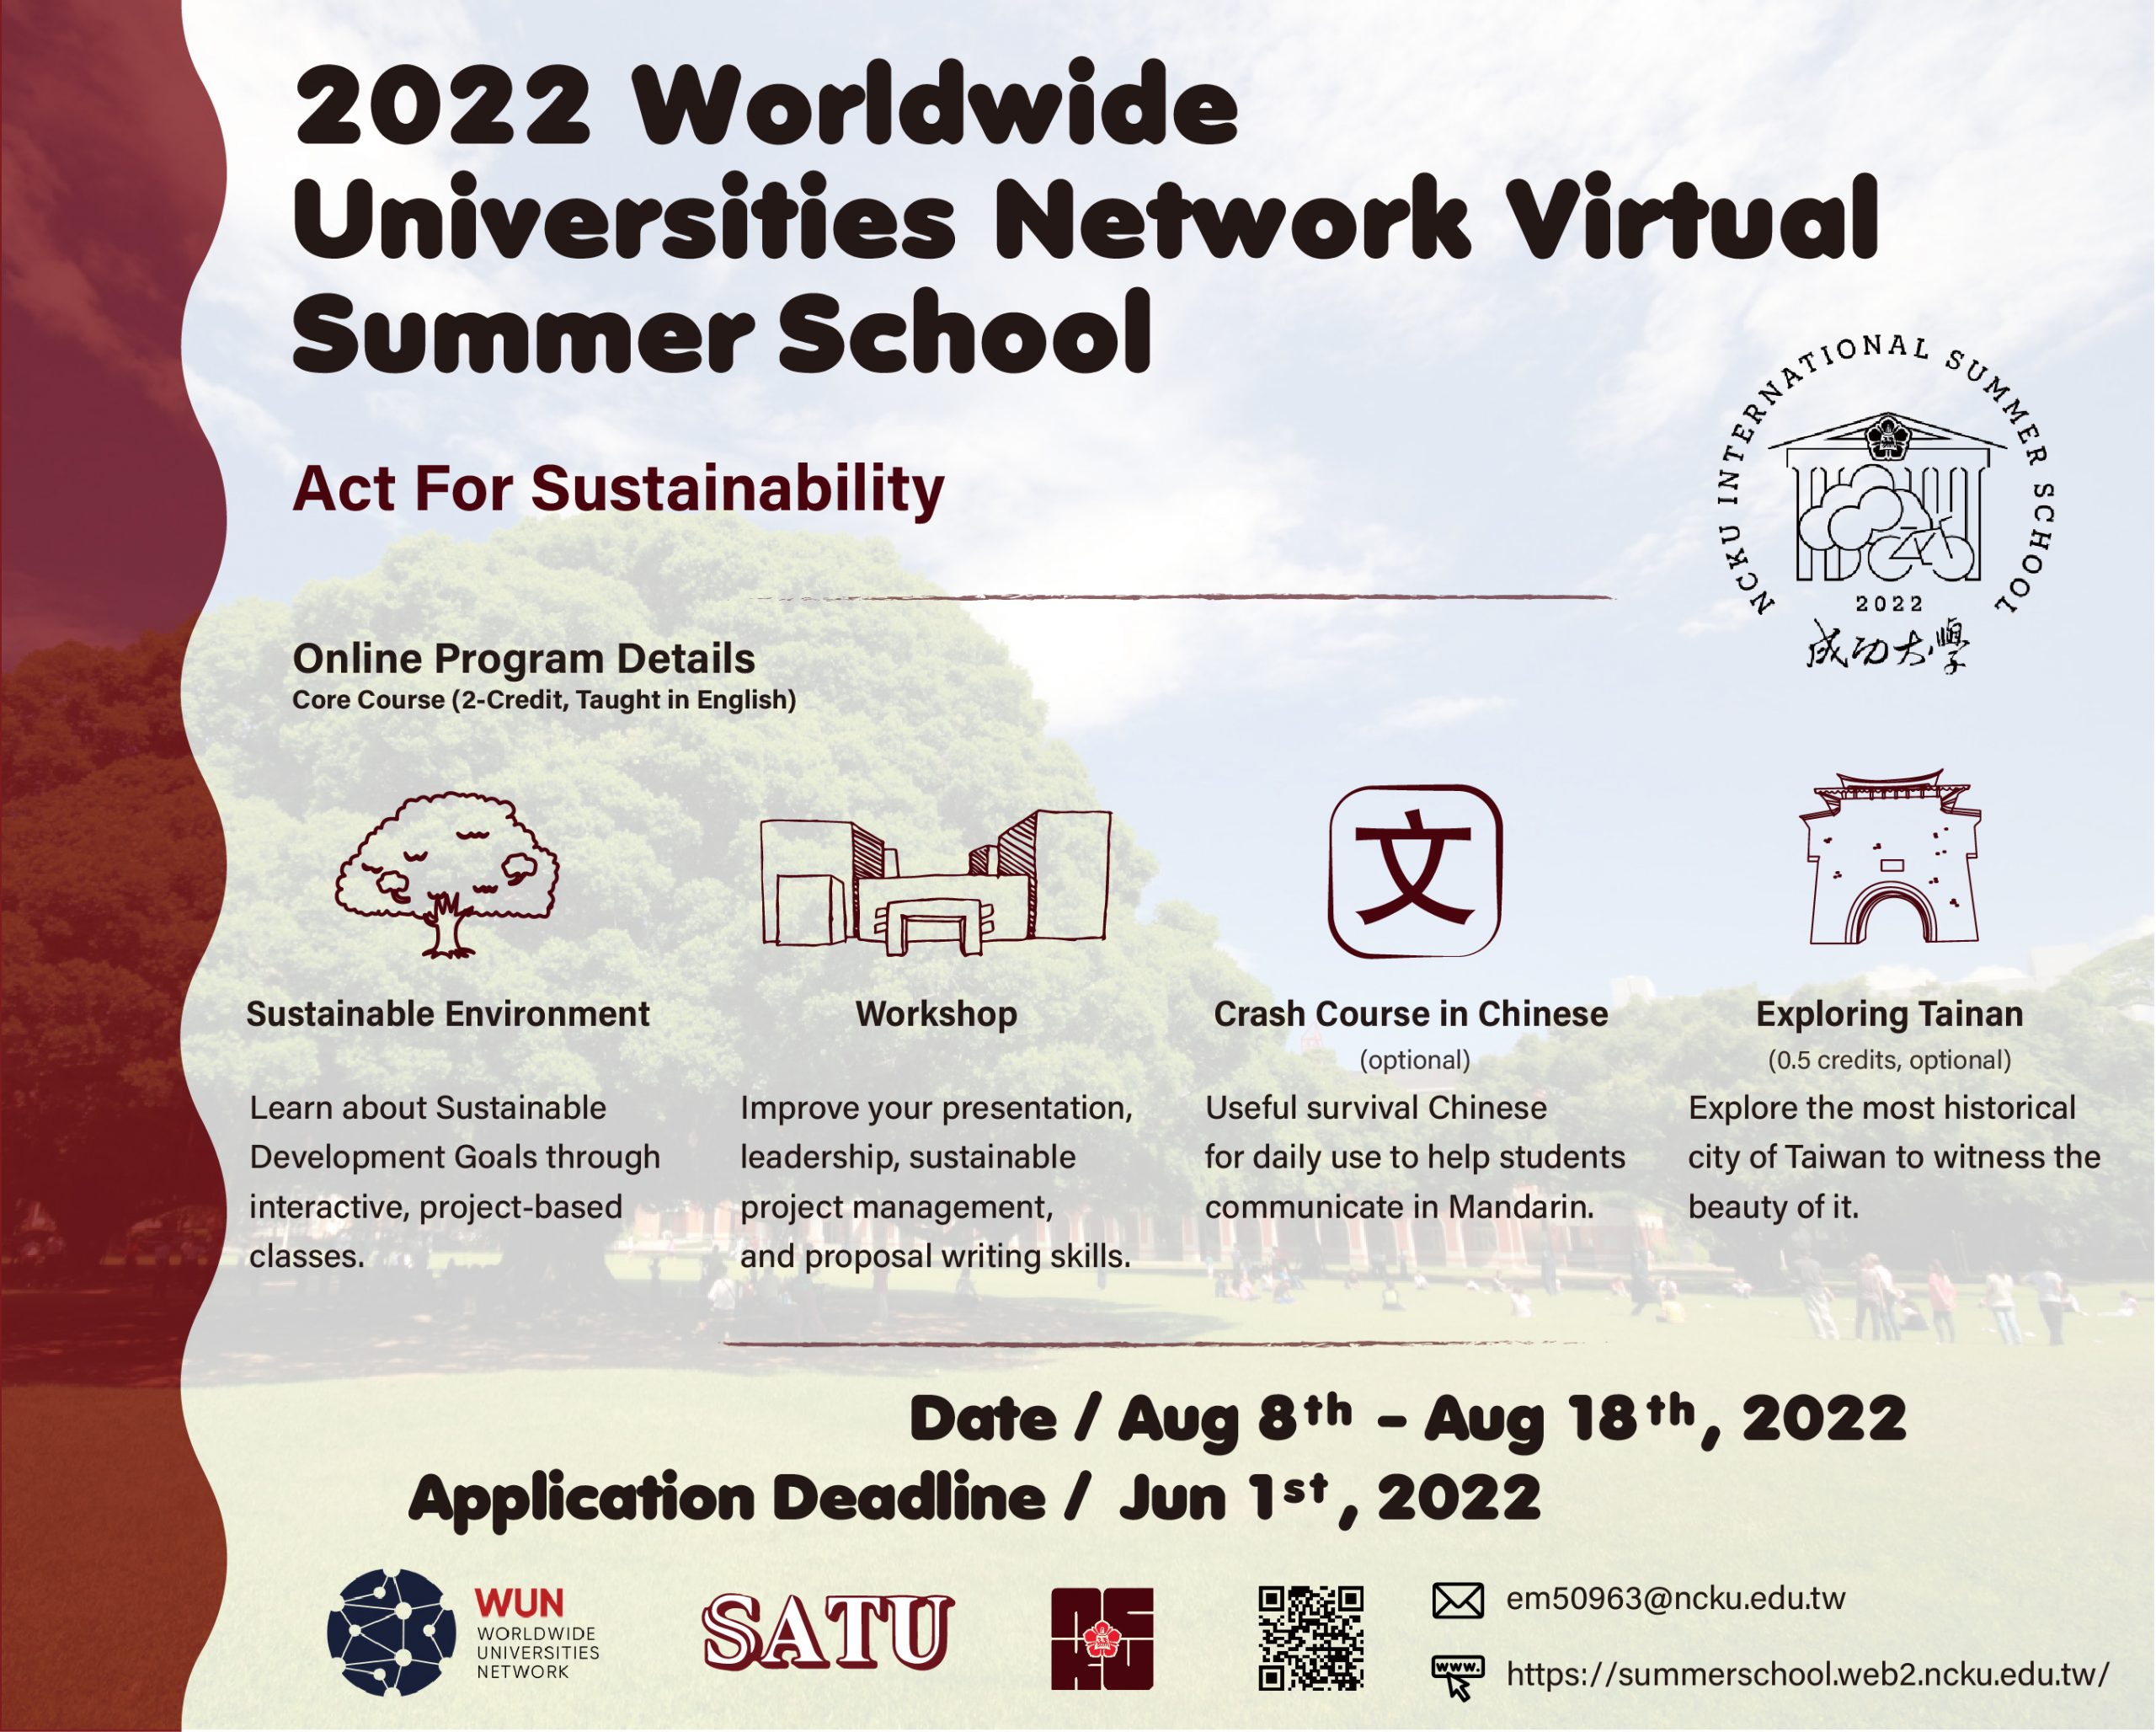 NCKU – 2022 Worldwide Universities Network Virtual Summer School – Application is Open Now!